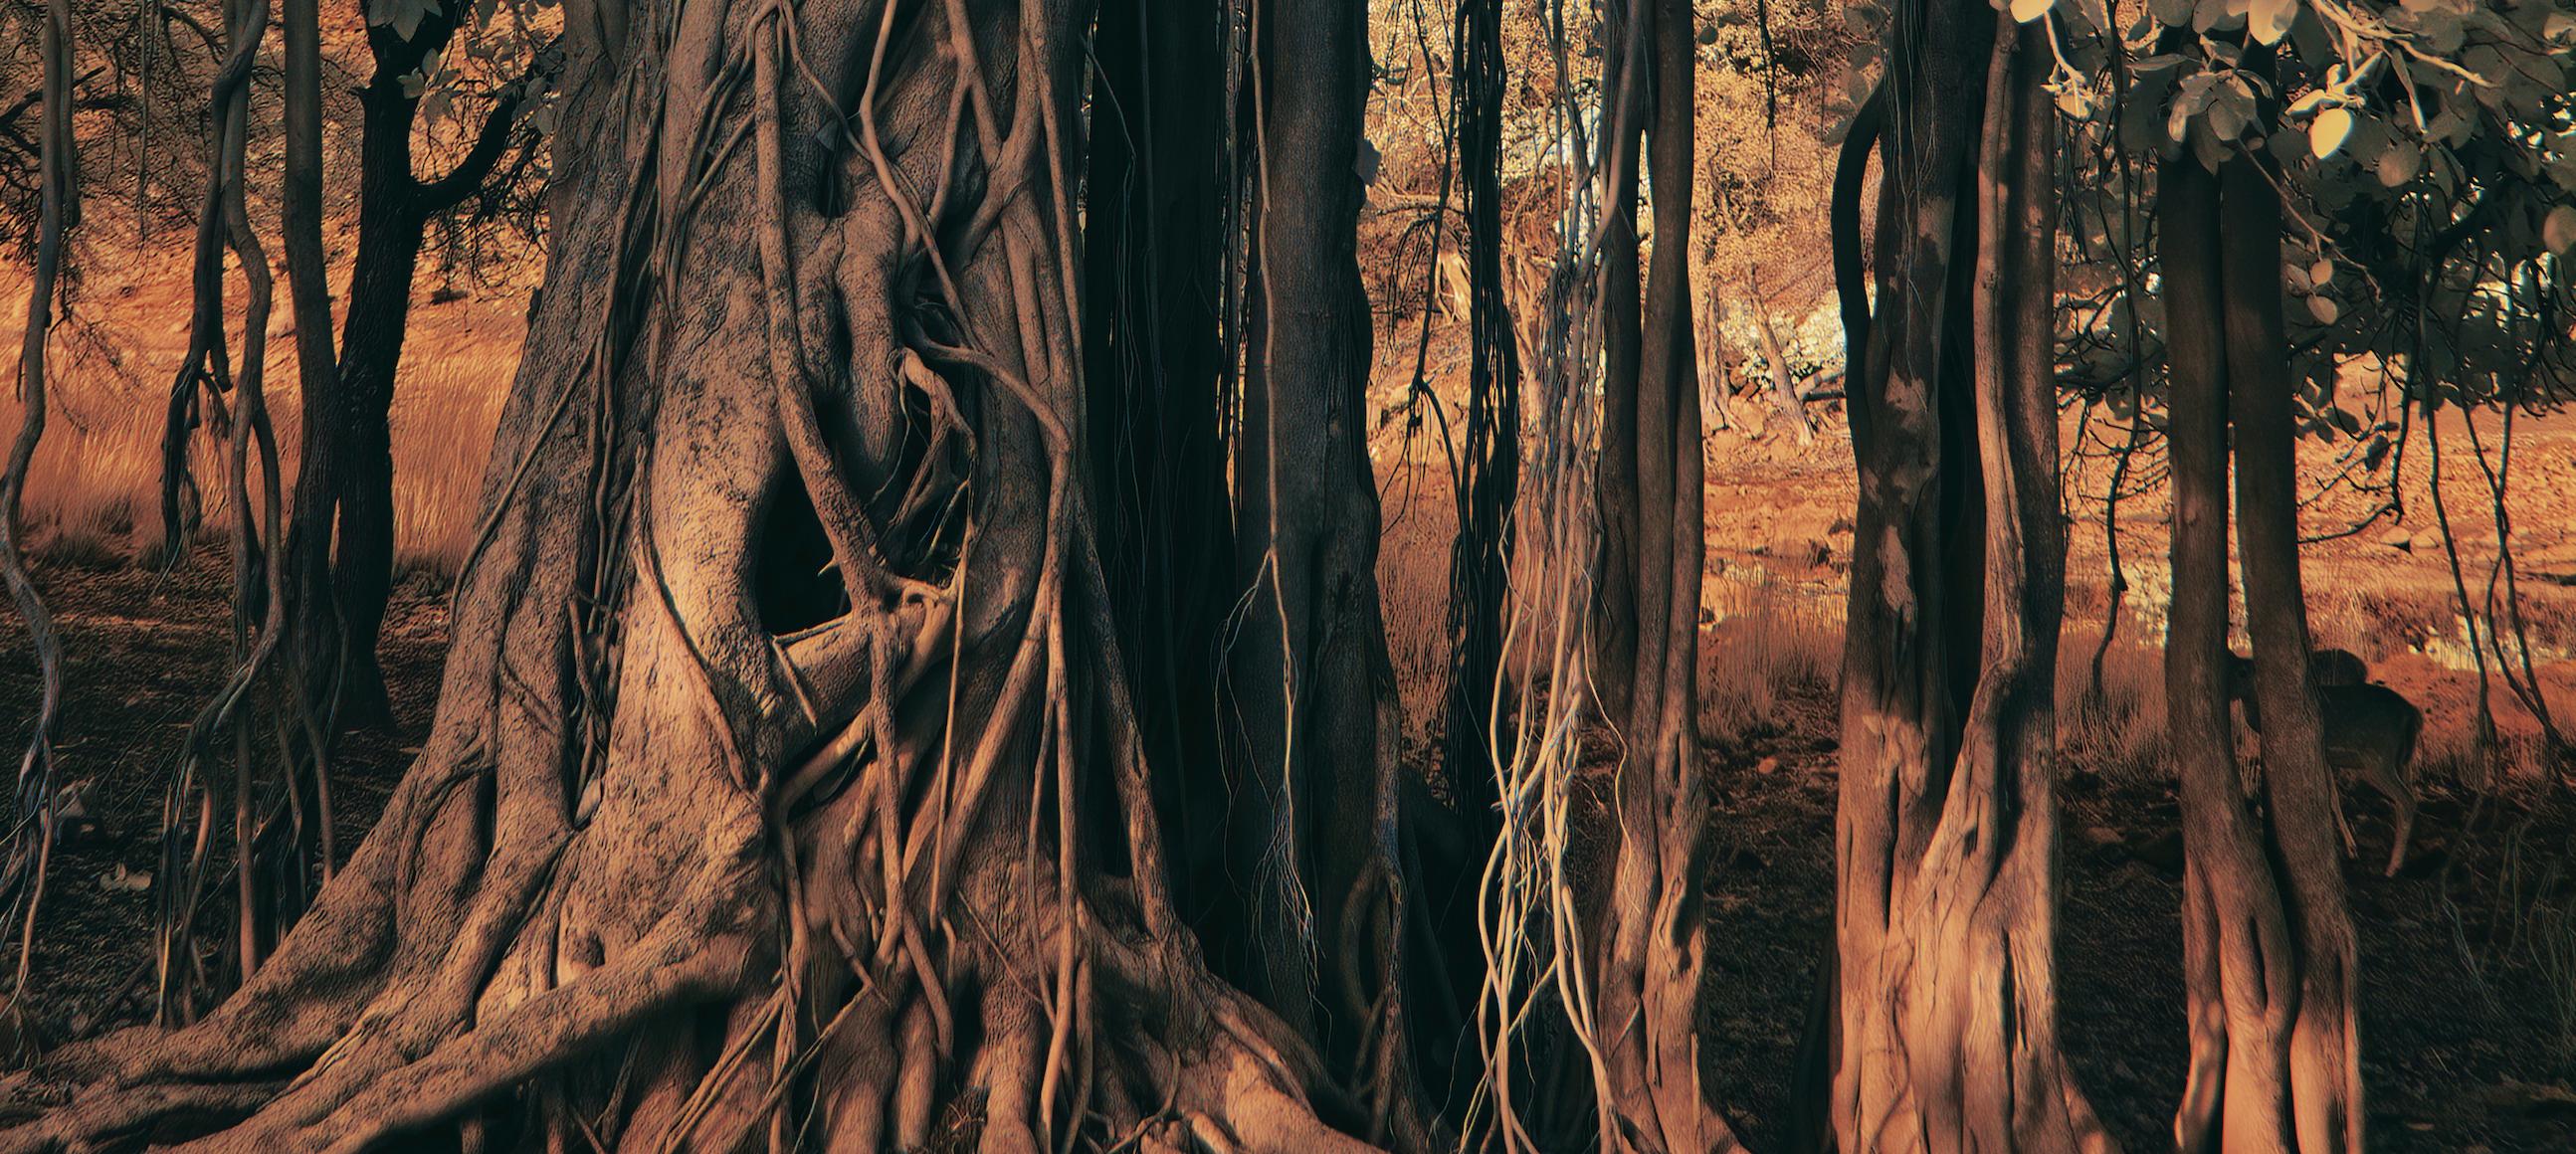 Large Landscape Nature Wildlife Photograph India Banyan Tree Orange Brown Forest For Sale 3